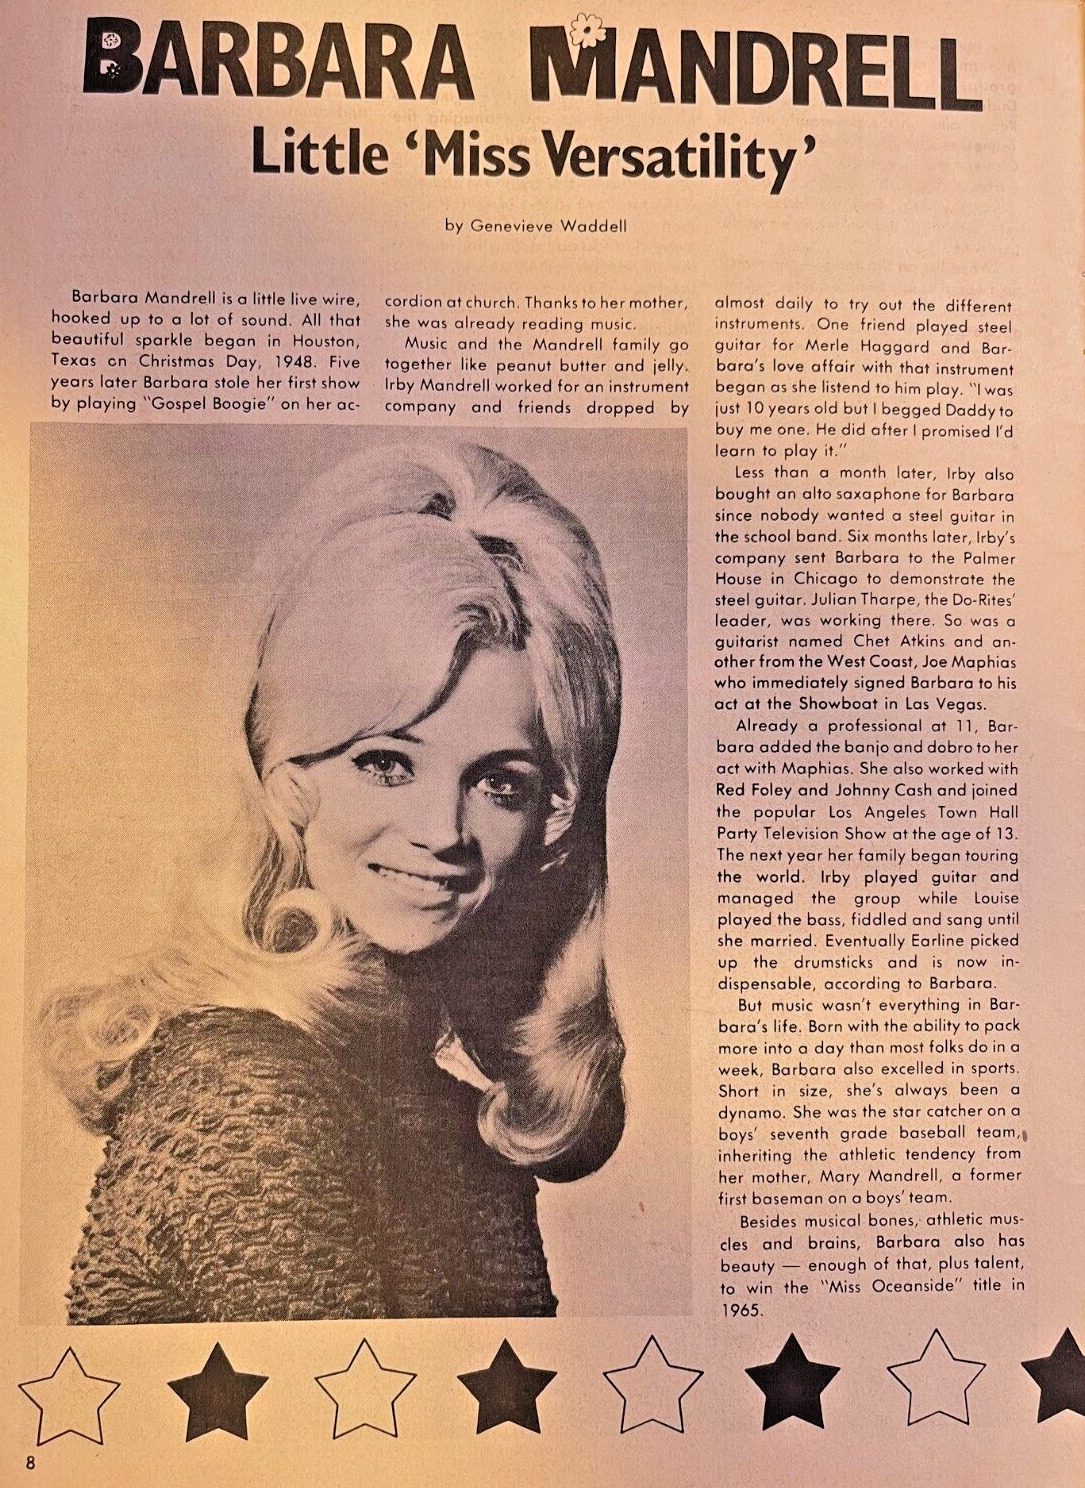 1974 Country Singer Barbara Mandrell